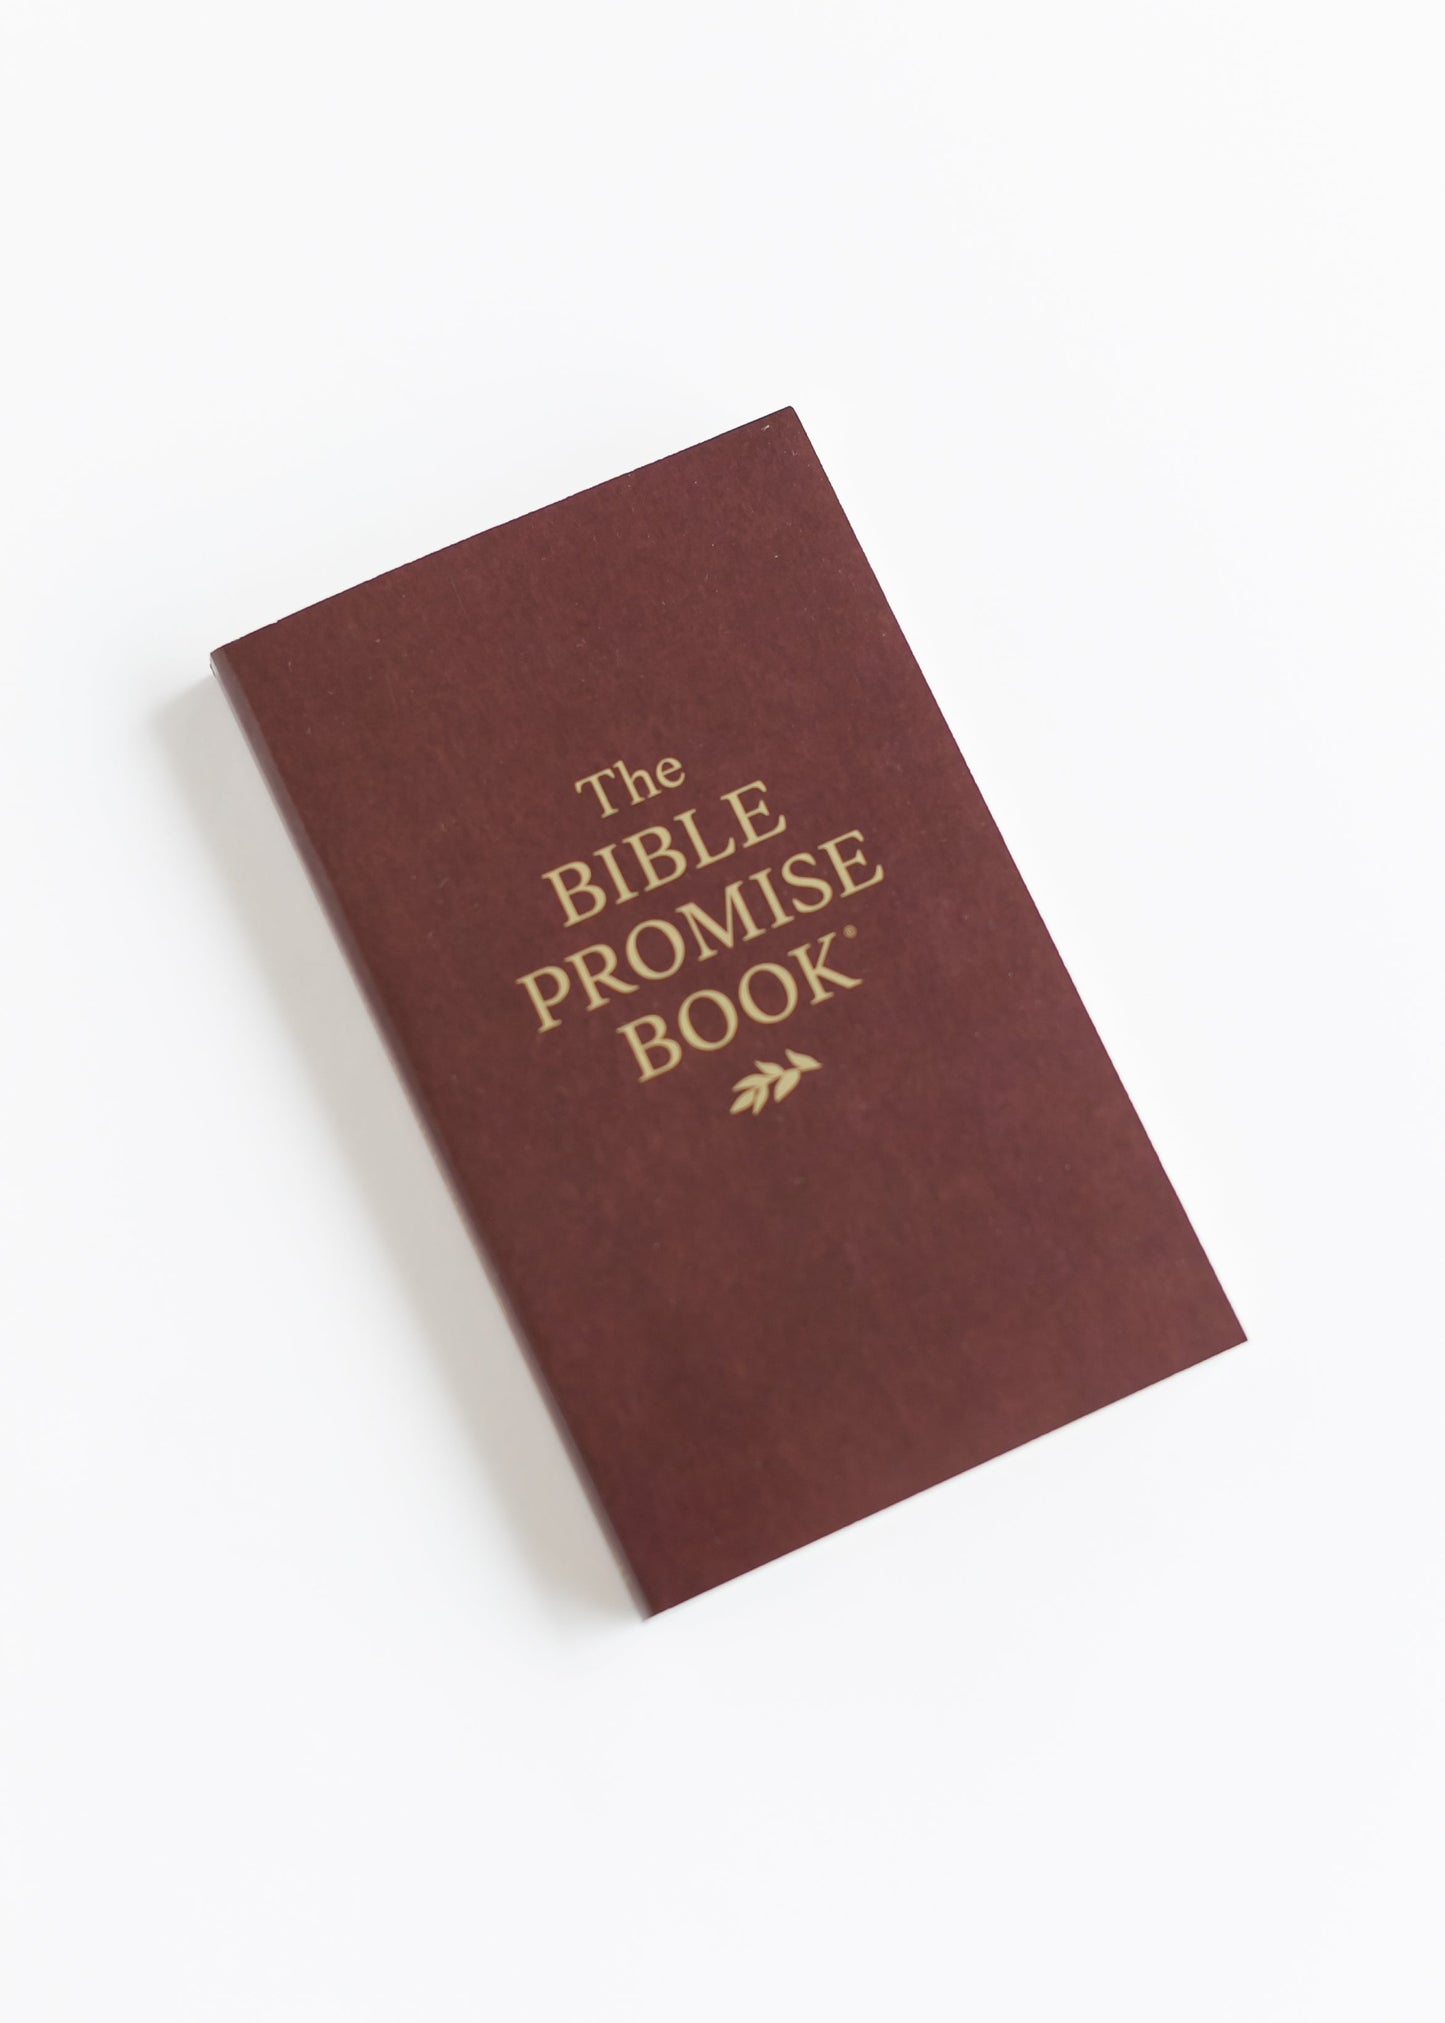 KJV Bible Promise Book Gifts